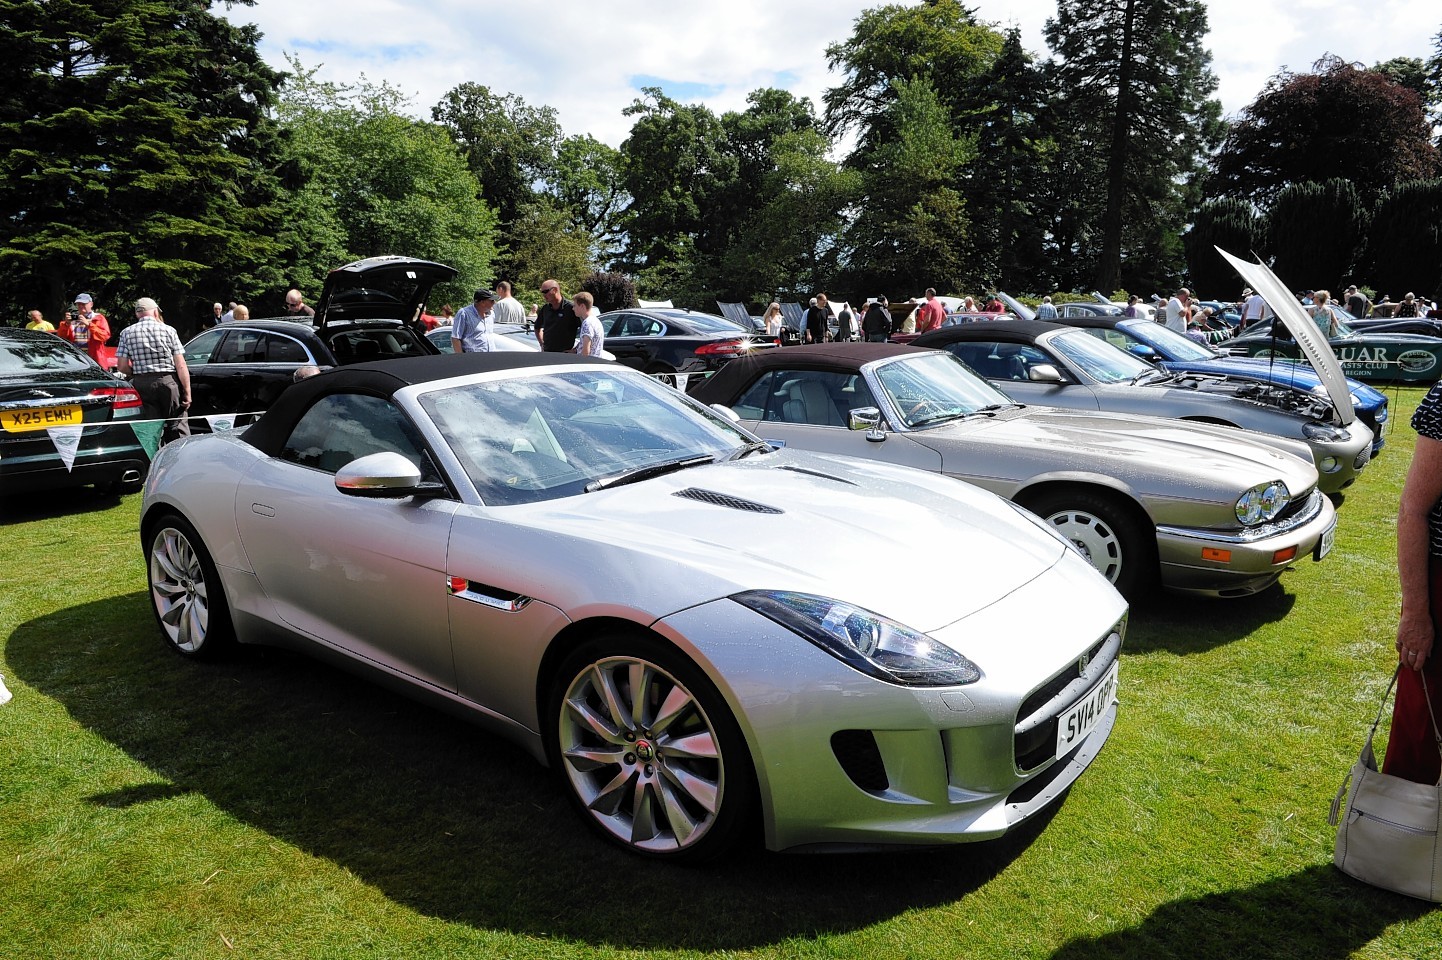 Jaguar Enthusiasts Club's annual gathering at Drum Castle